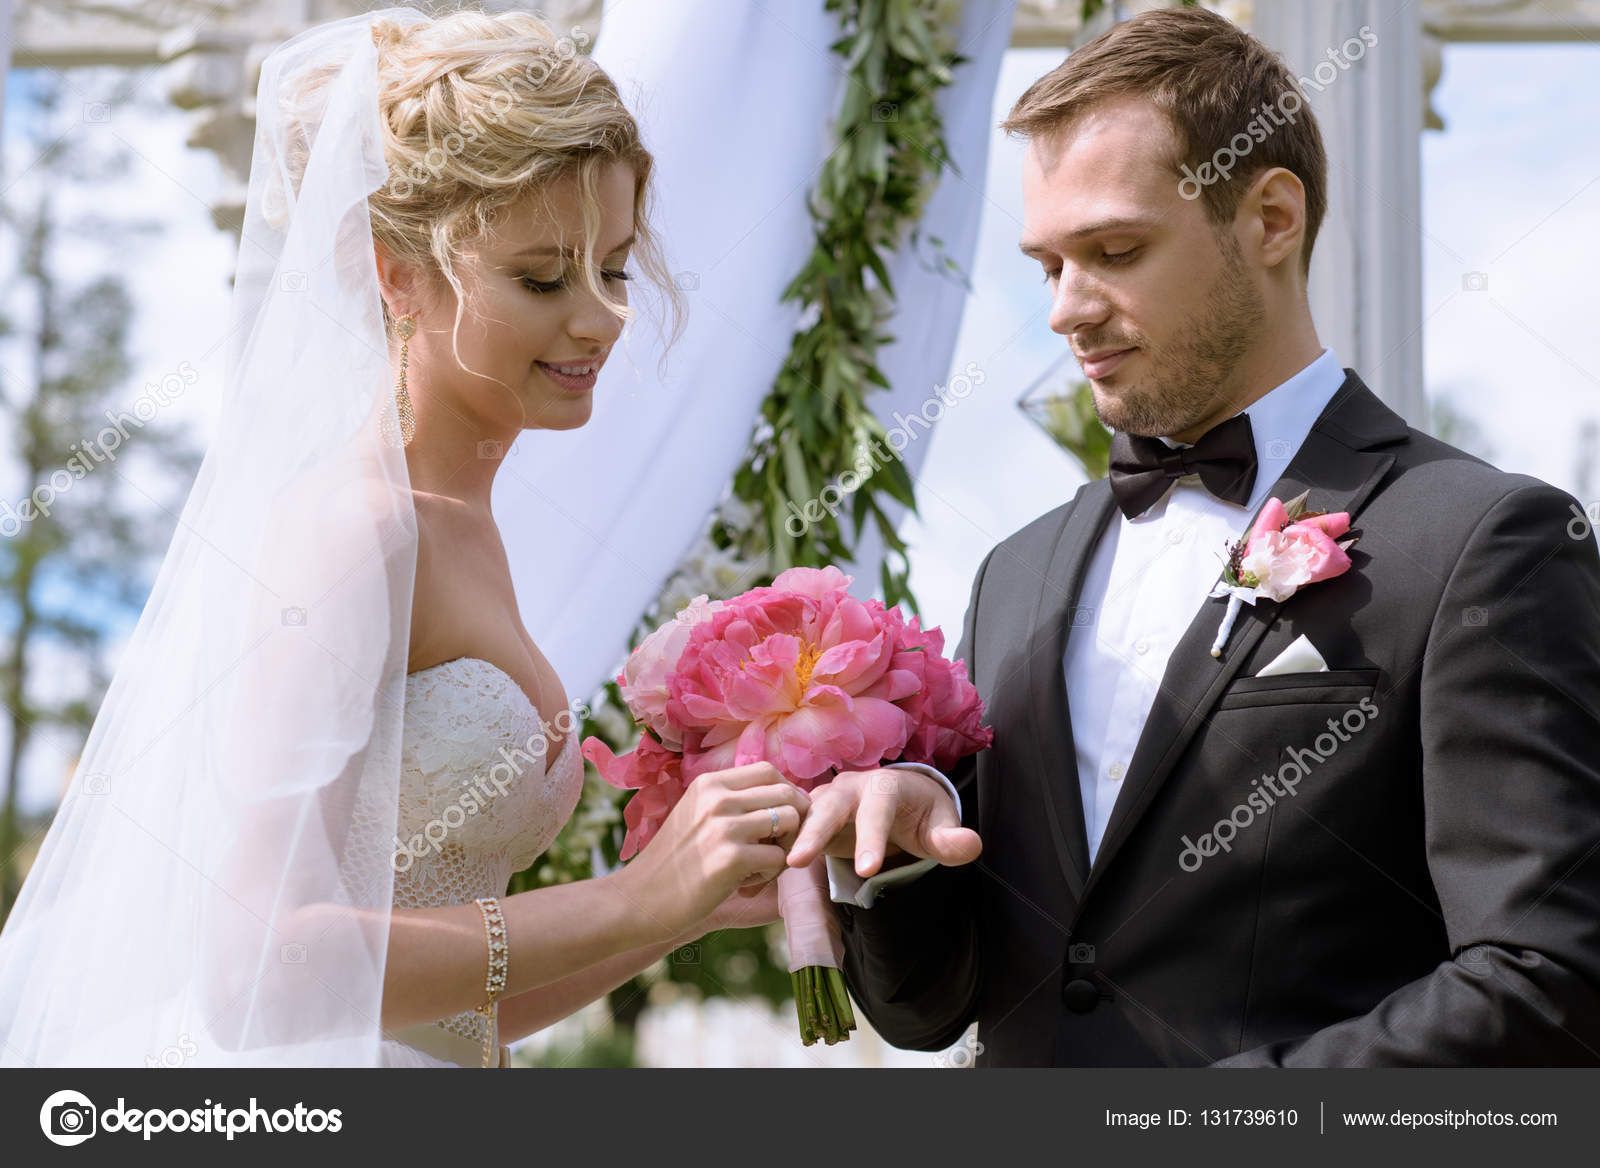 depositphotos_131739610-stock-photo-wedding-couple-registering-marriage.jpg